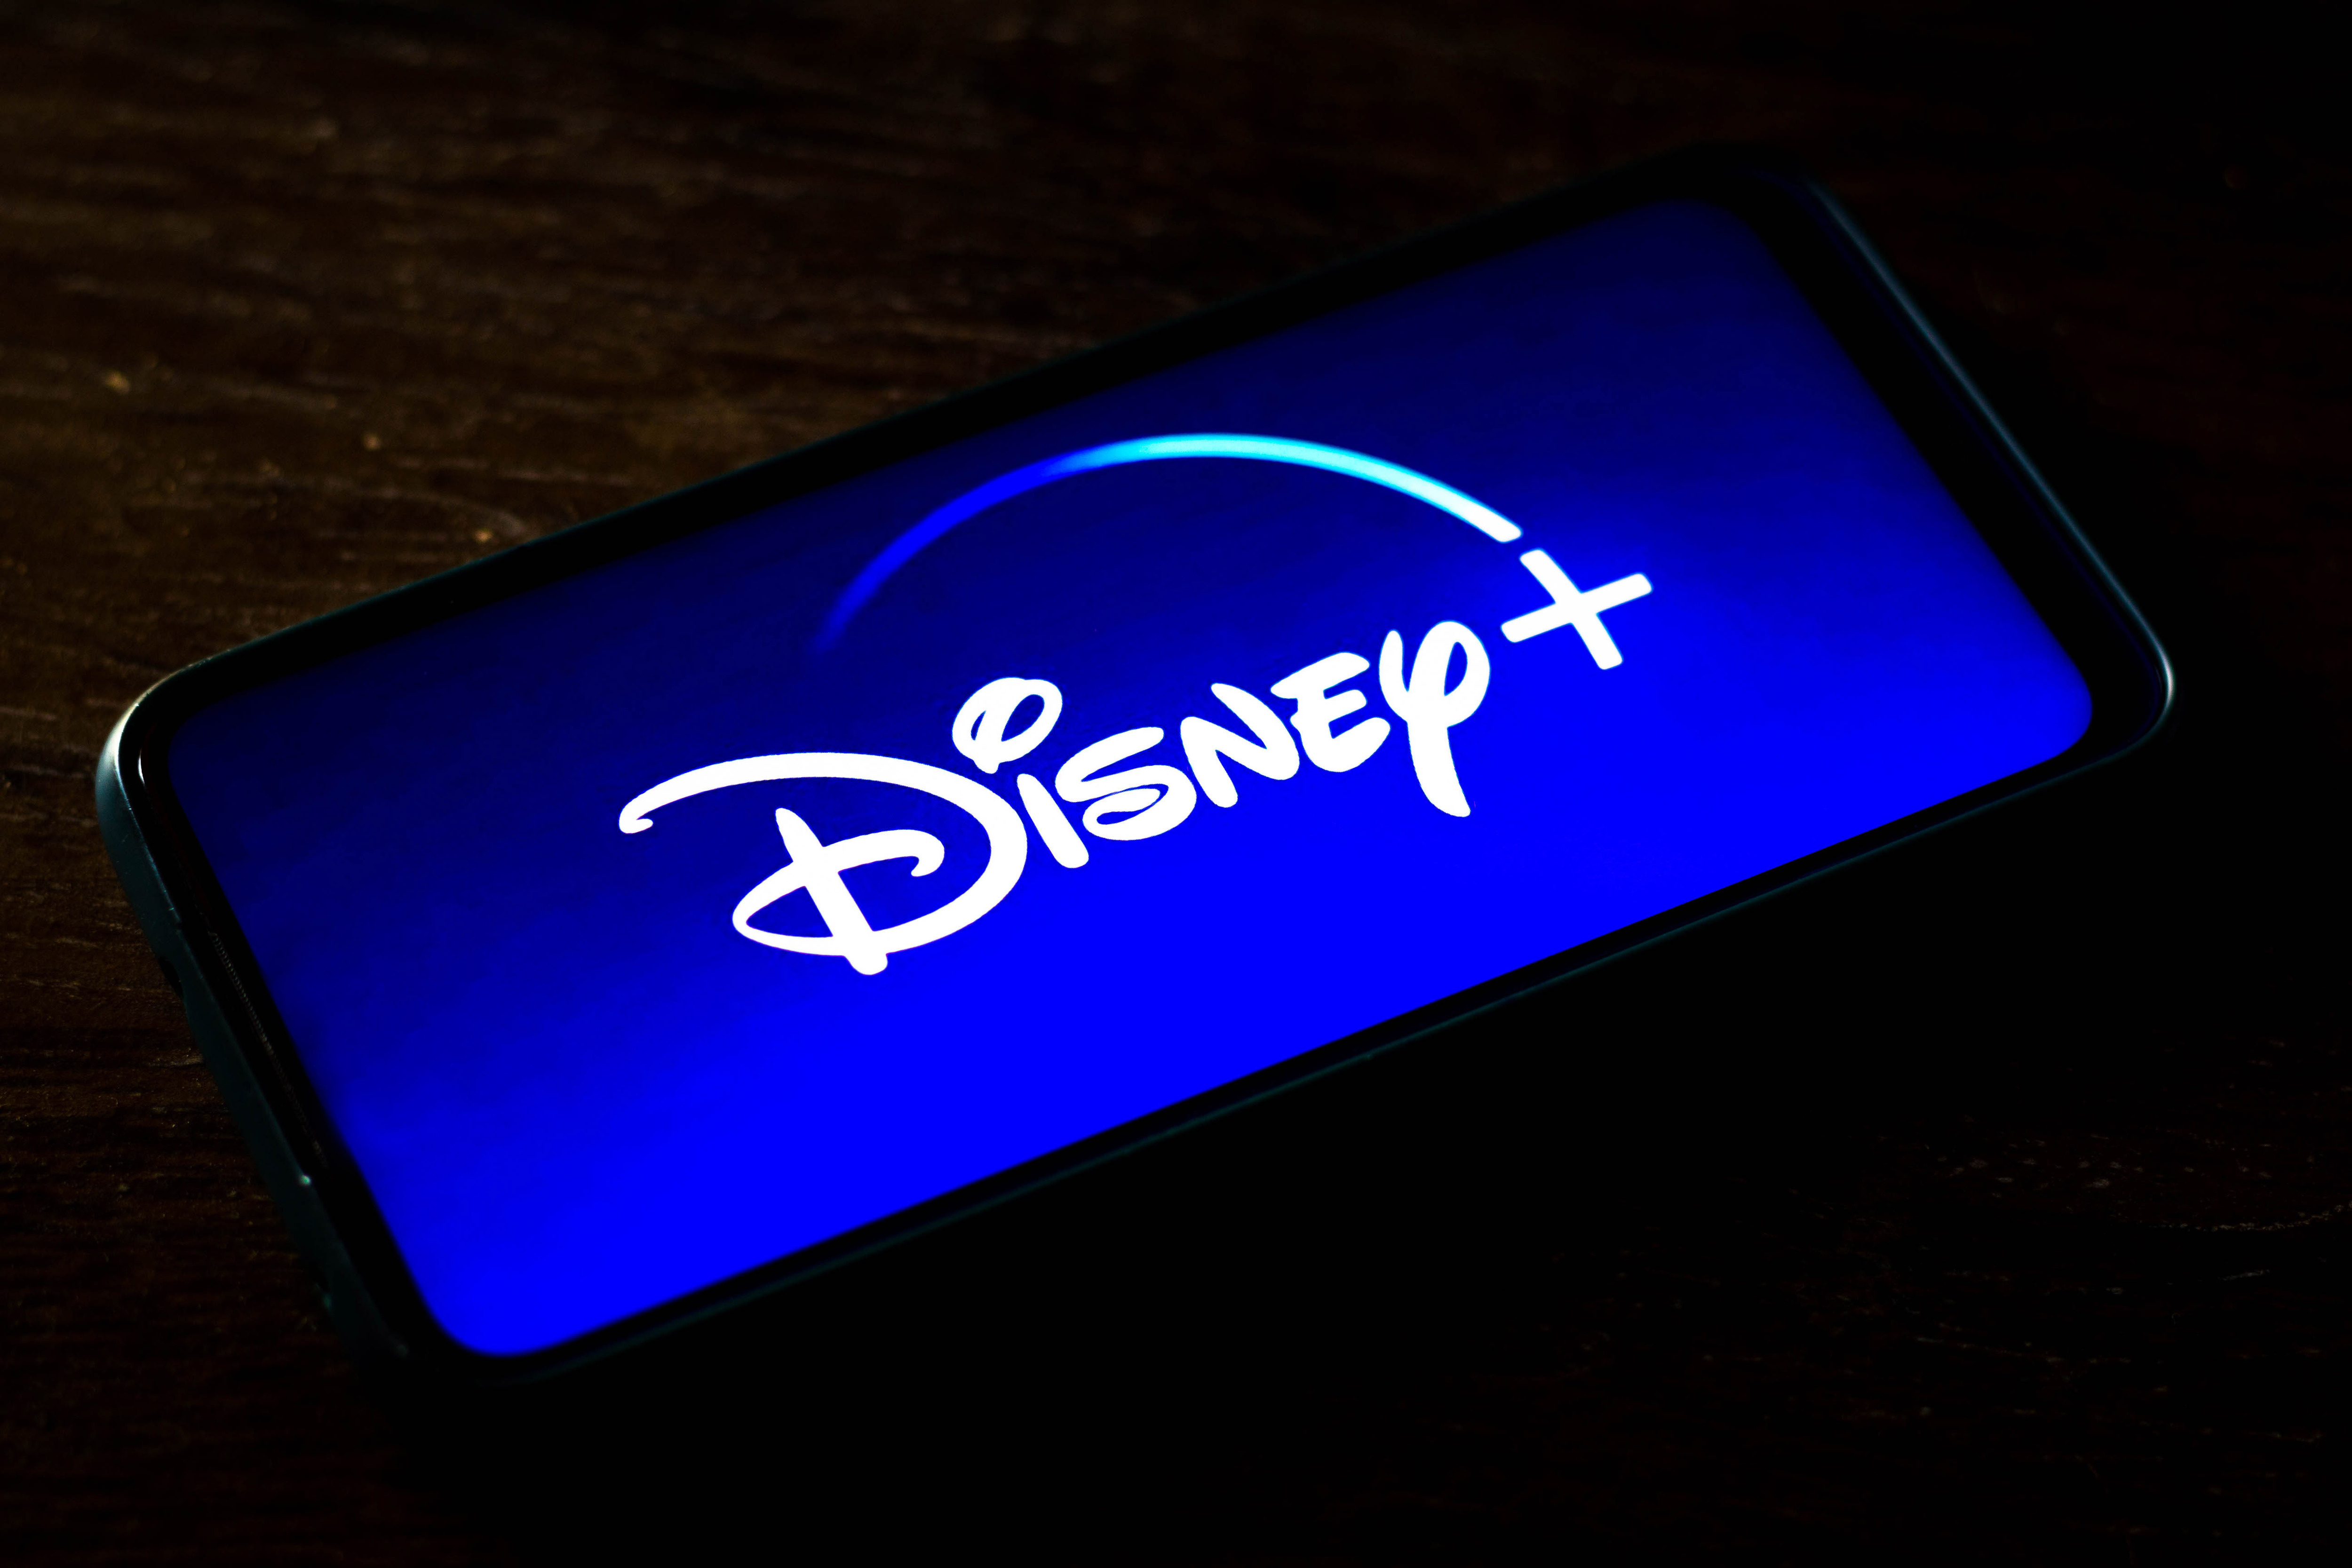 Photo illustration the Disney+ logo seen displayed on a smartphone screen